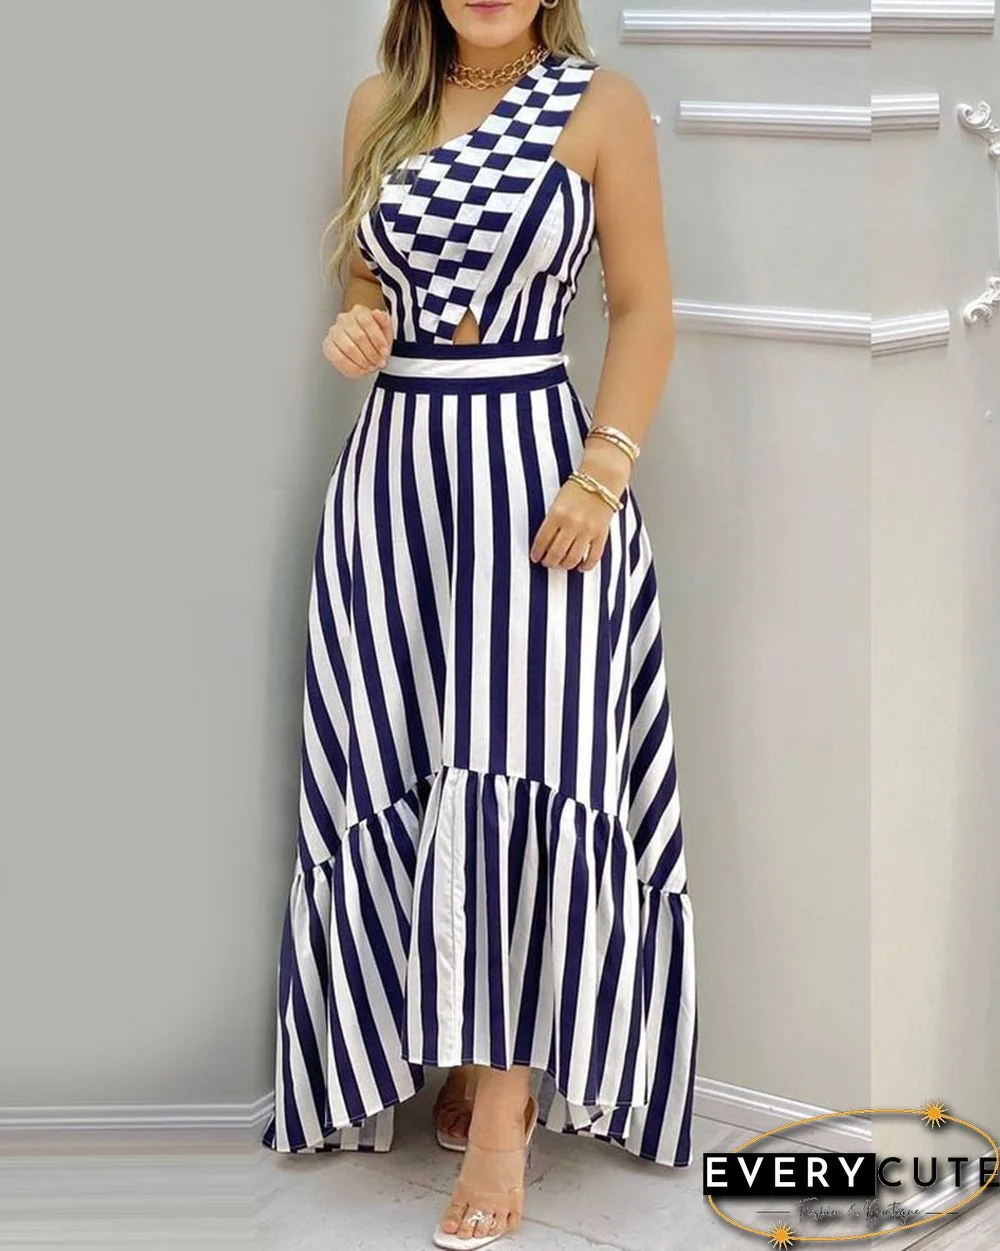 Summer Elegant One Shoulder Striped Colorblock Sleeveless Asymmetric High Waist Casual Maxi Dresses Fashion Sexy Skinny Robes